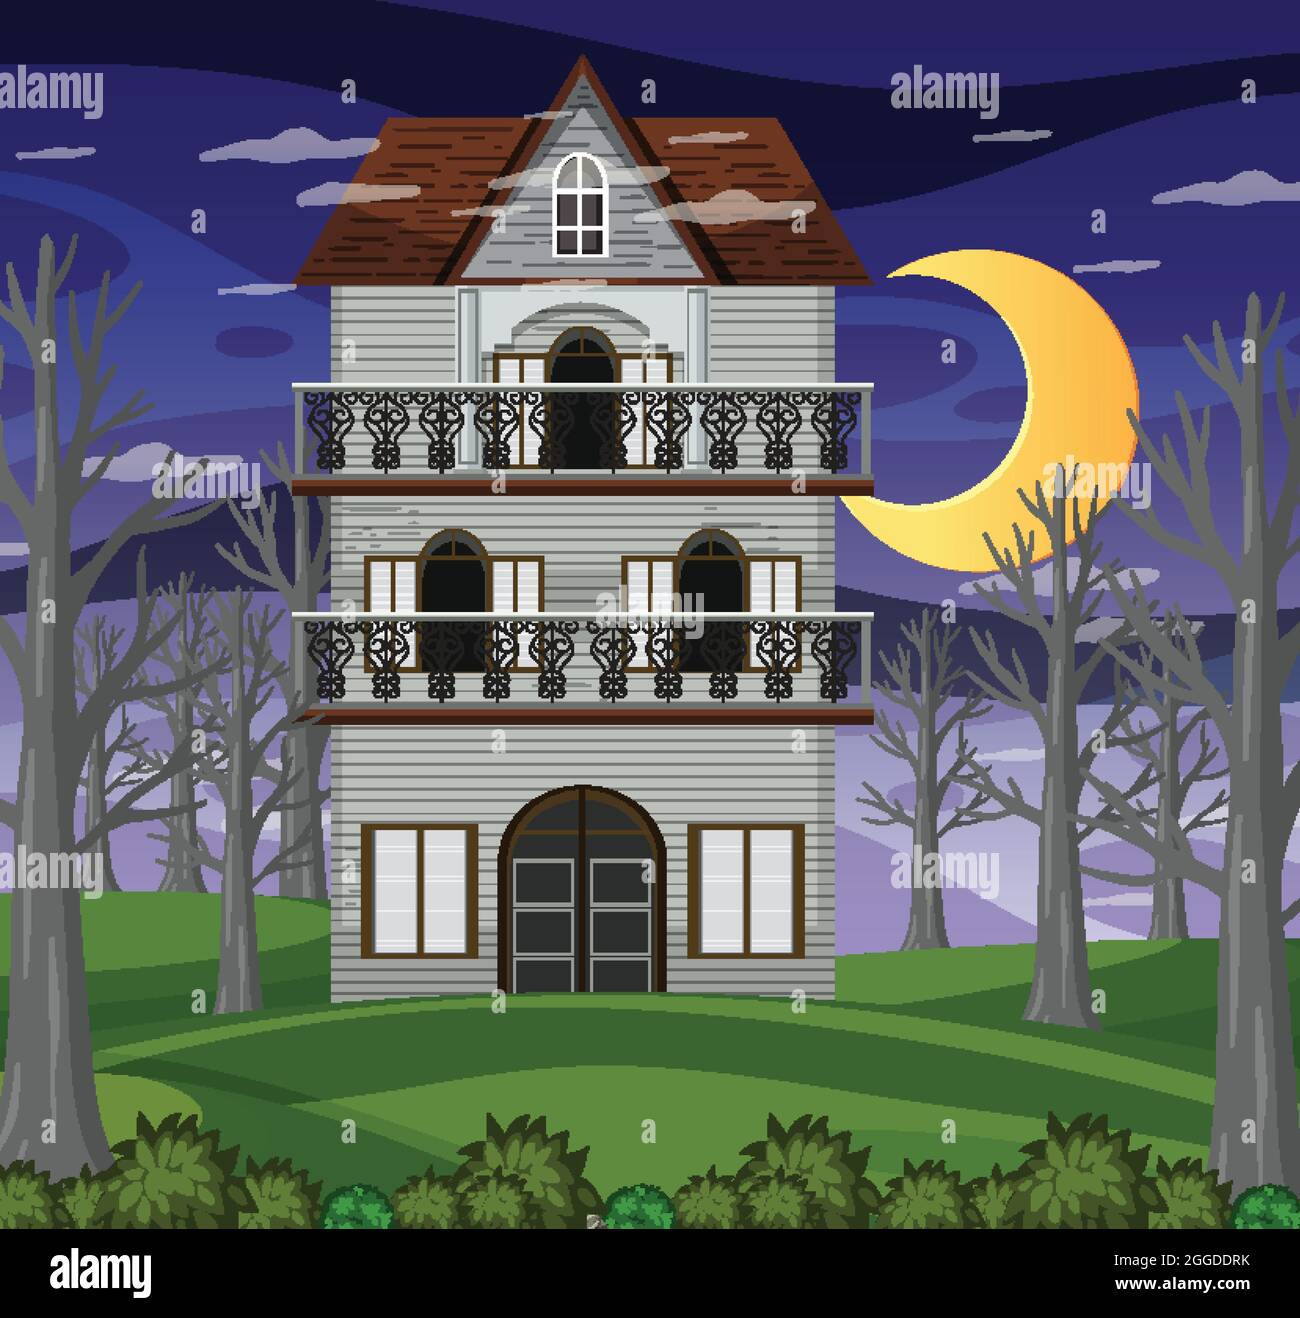 Scene with haunted halloween mansion illustration Stock Vector